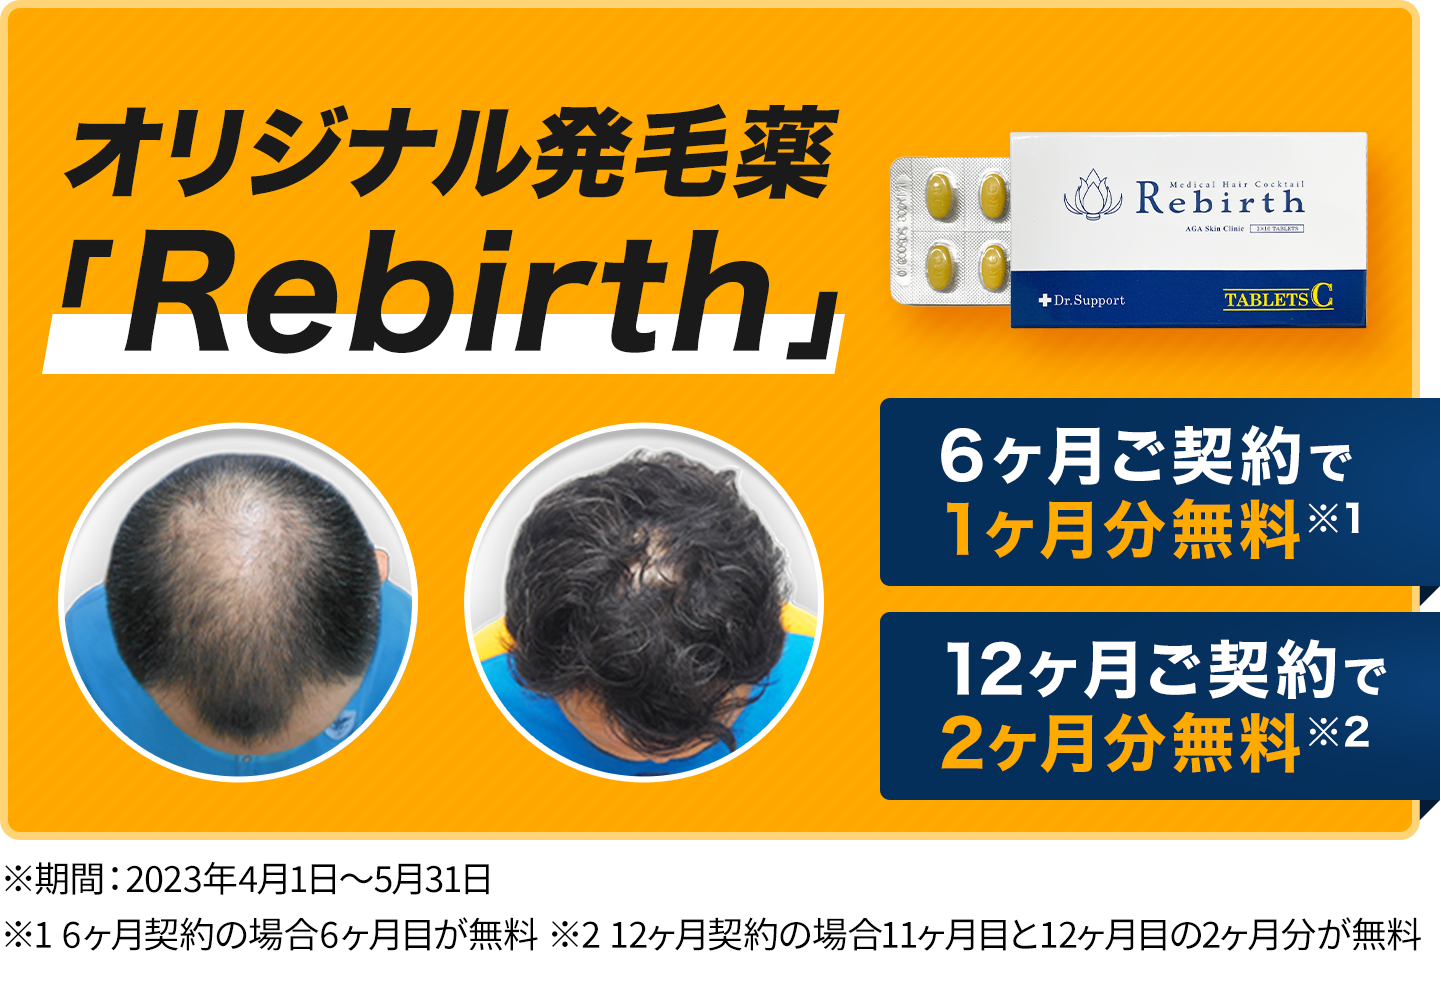 Rebirth - 当院のオリジナルAGA治療薬|【公式】薄毛・抜け毛治療なら 